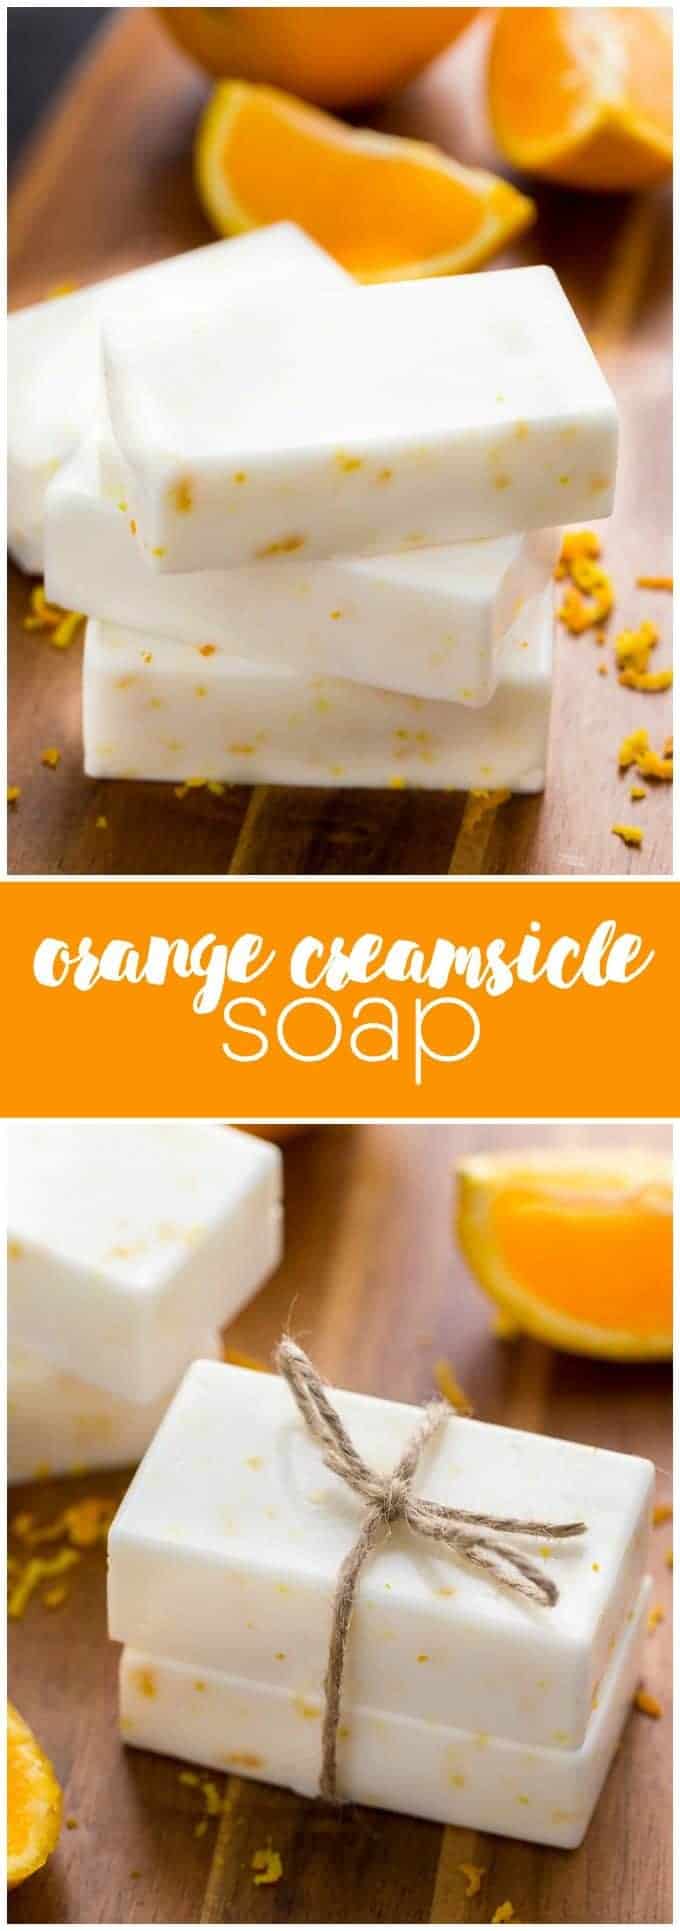 Orange creamsicle soap